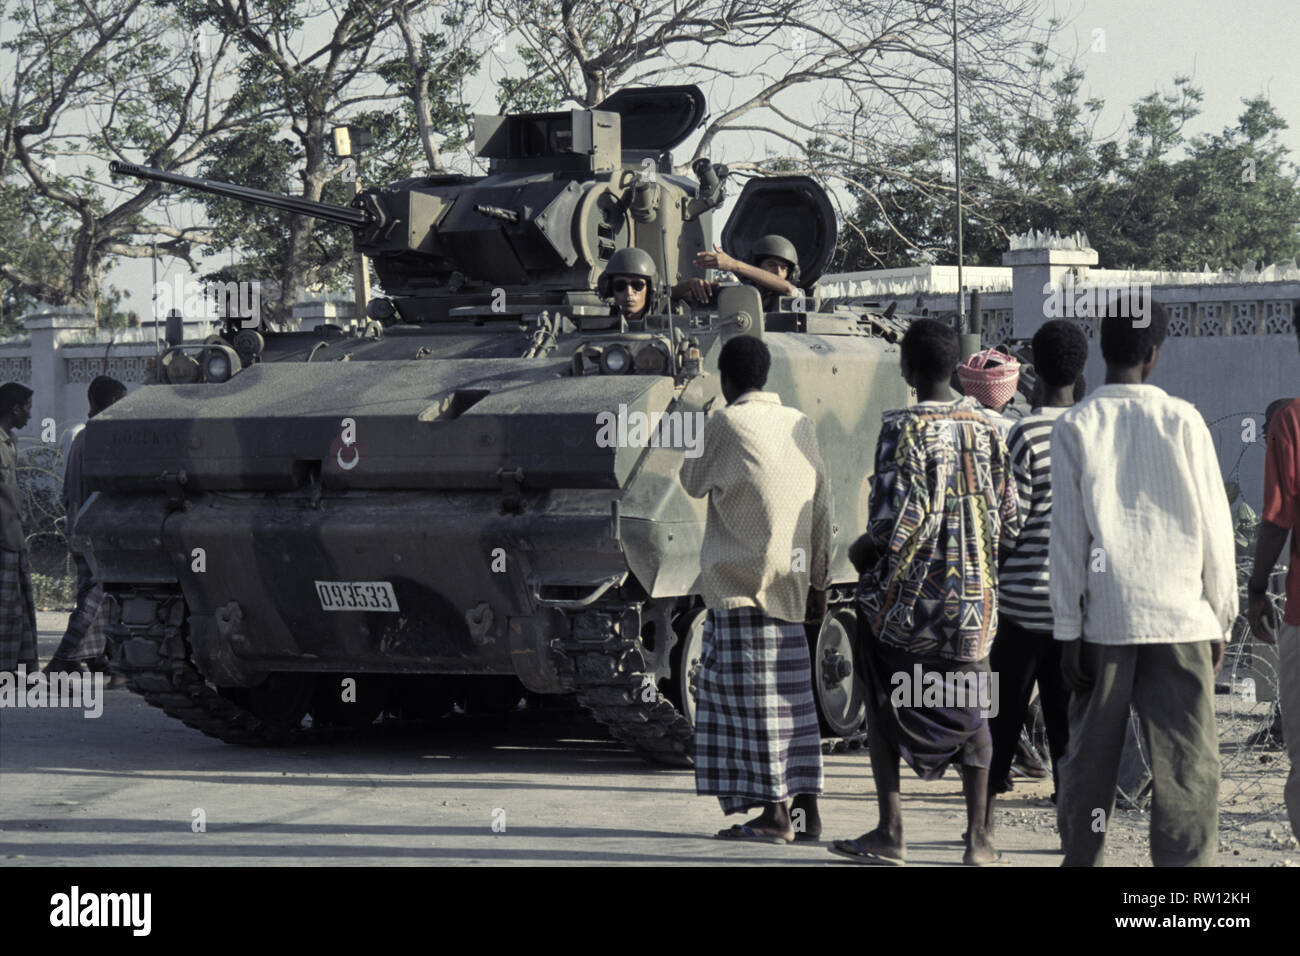 17th October 1993 An FNSS Defense Systems Turkish IFV (Infantry Fighting Vehicle) near UNOSOM Headquarters in Mogadishu, Somalia. Stock Photo